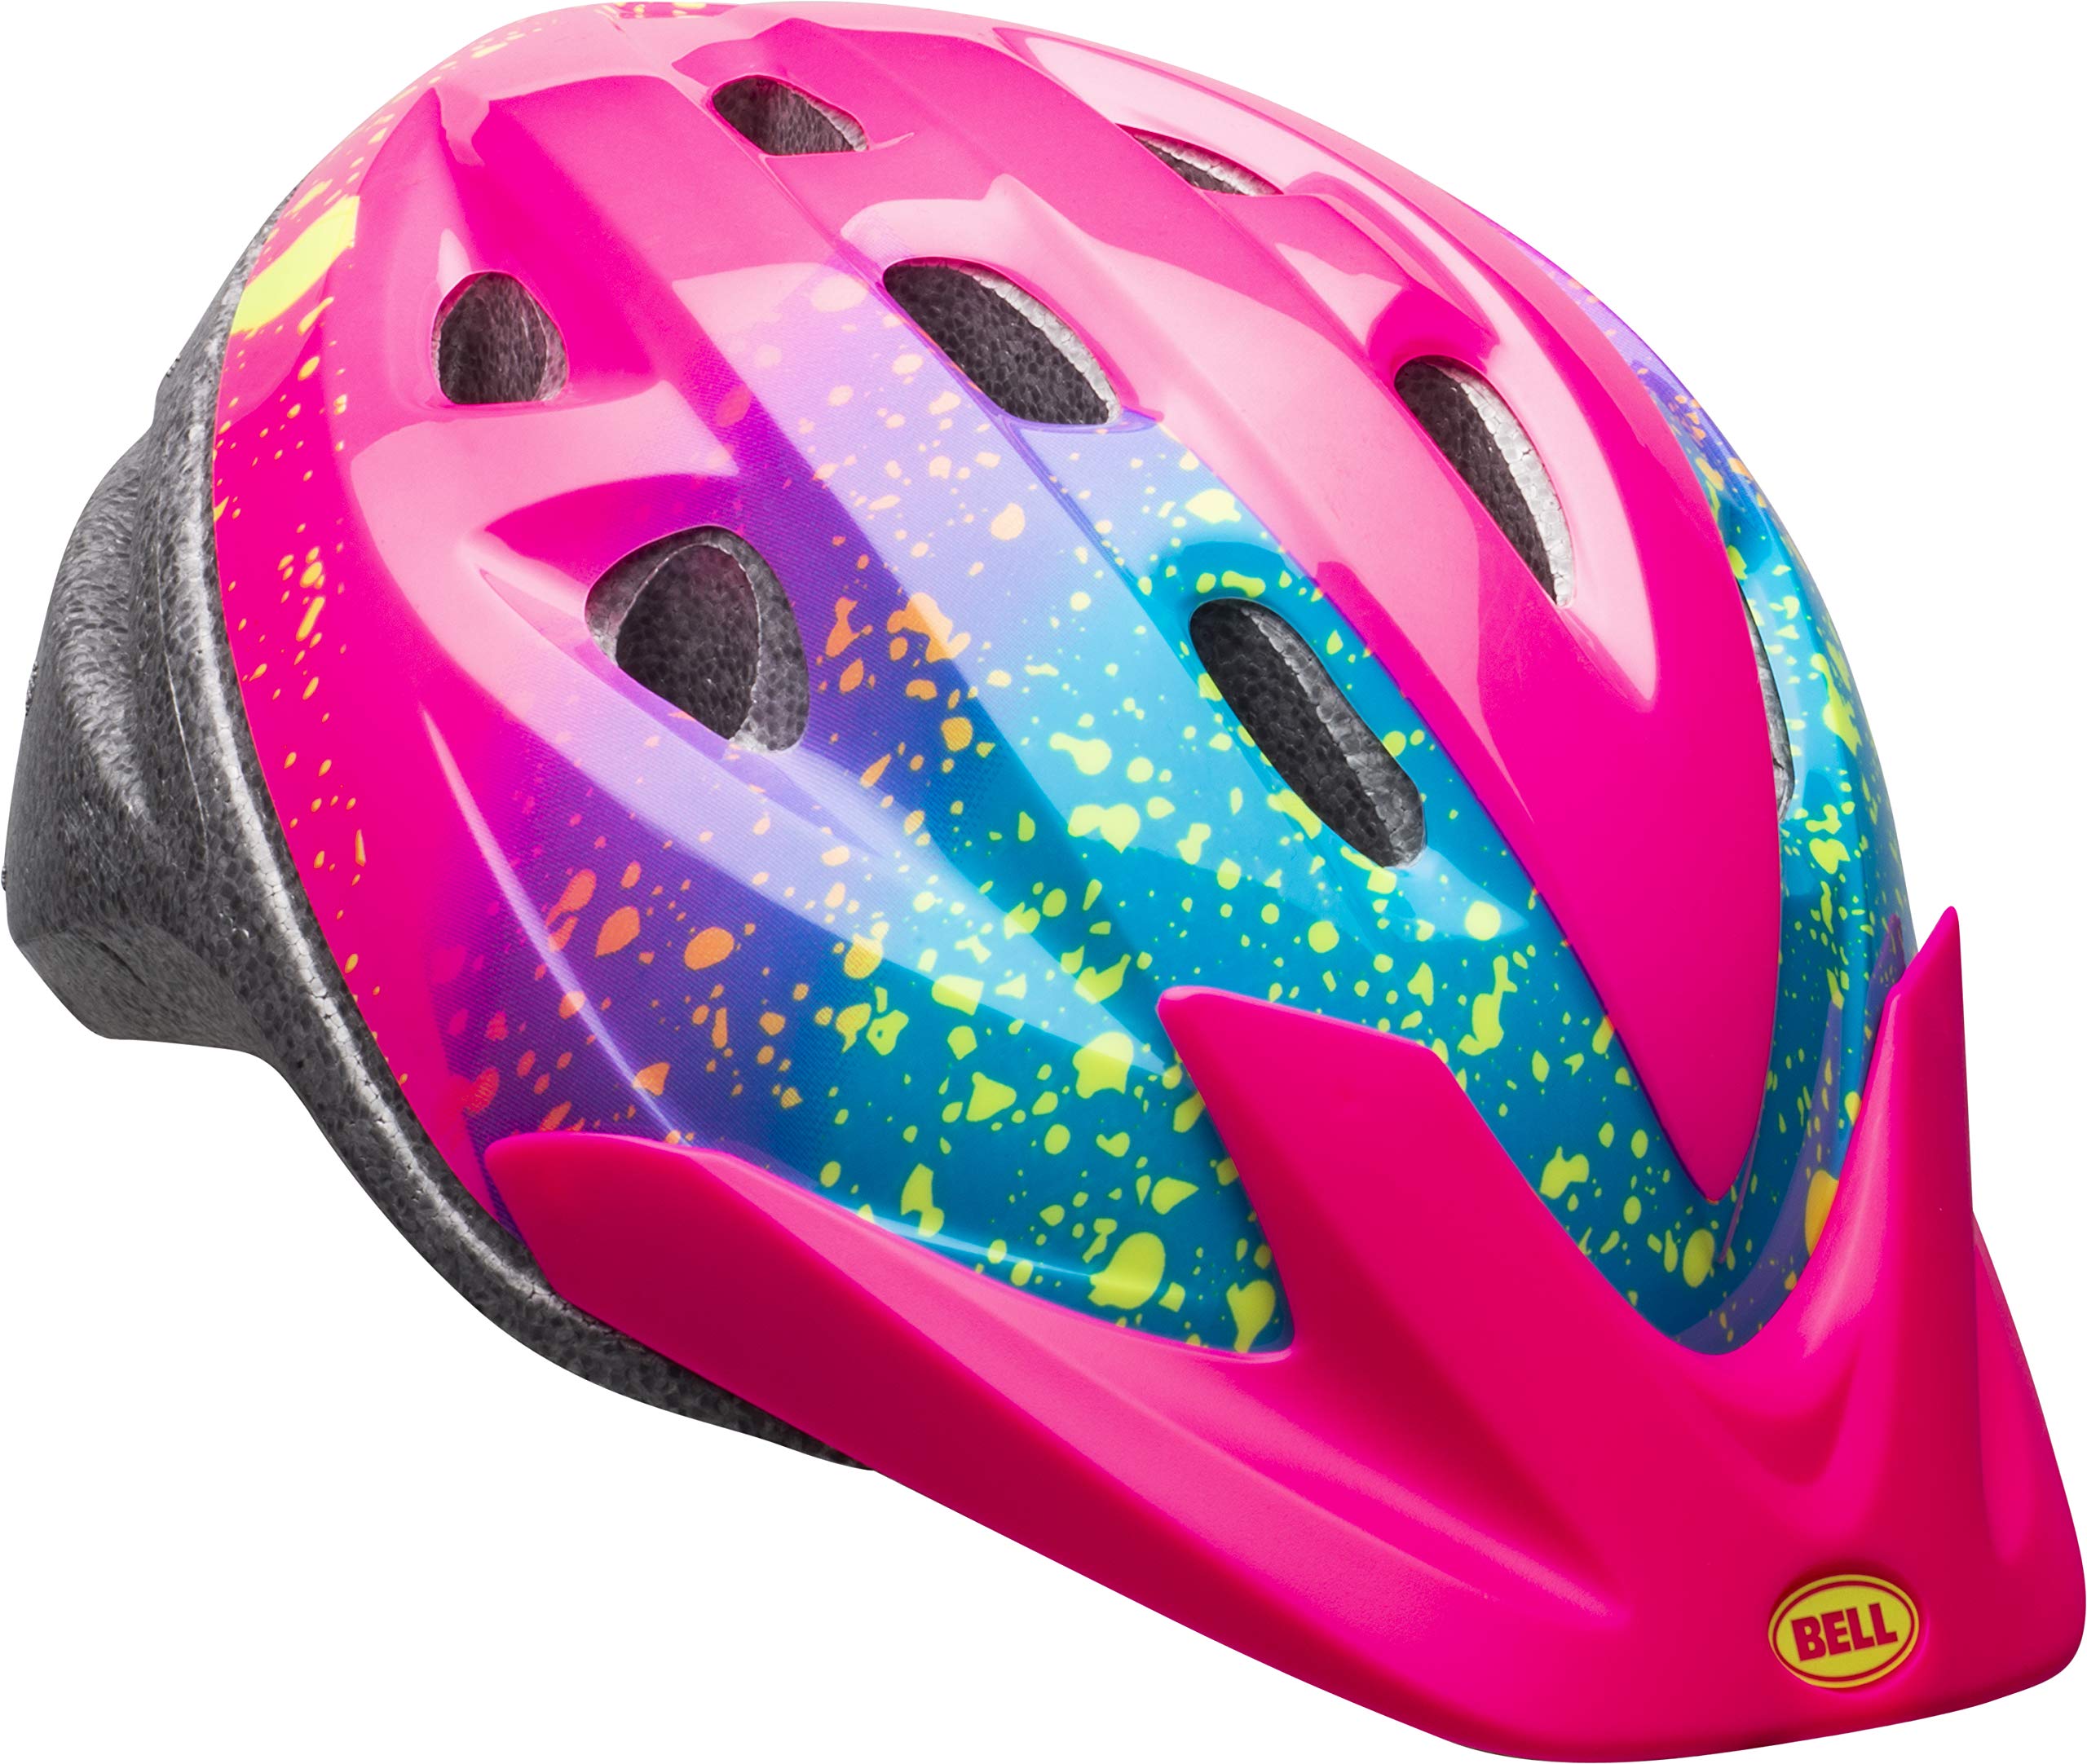 Bell Rally Child Helmet Pink Splatter Stella Helmet